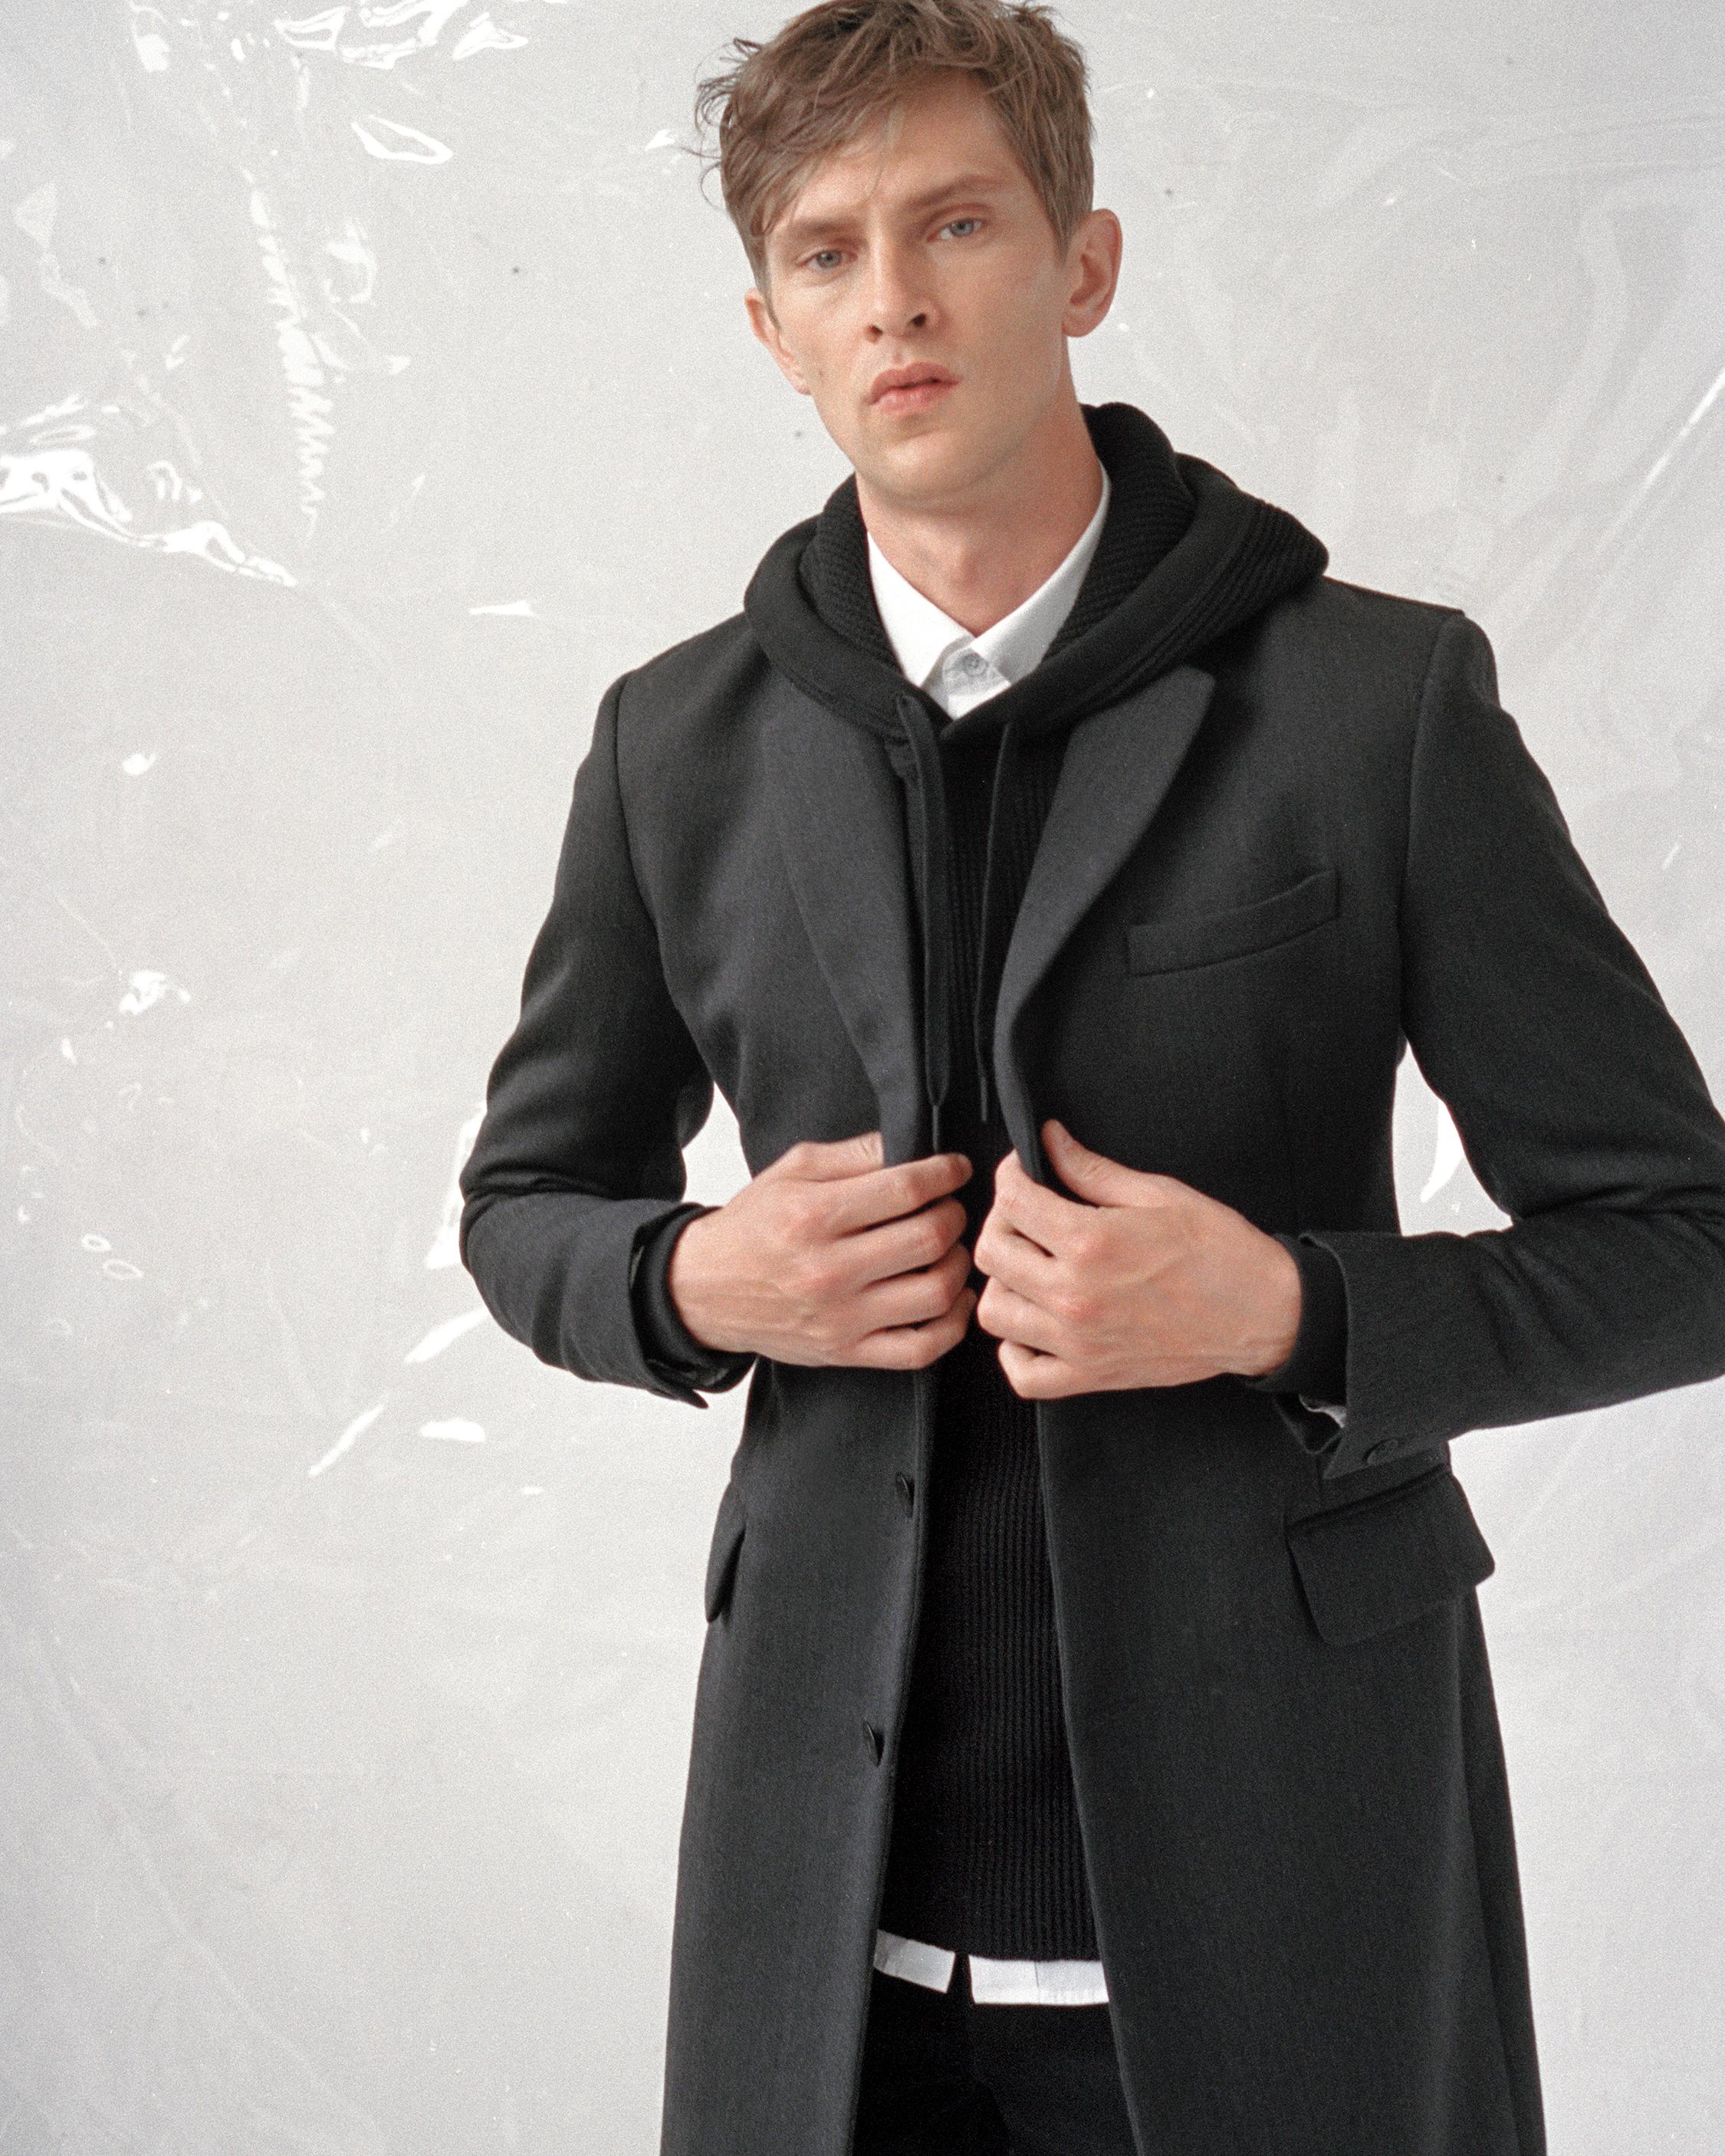 Men's Coats, Jackets & Blazers: Leather Jackets to Sherpa to Flight